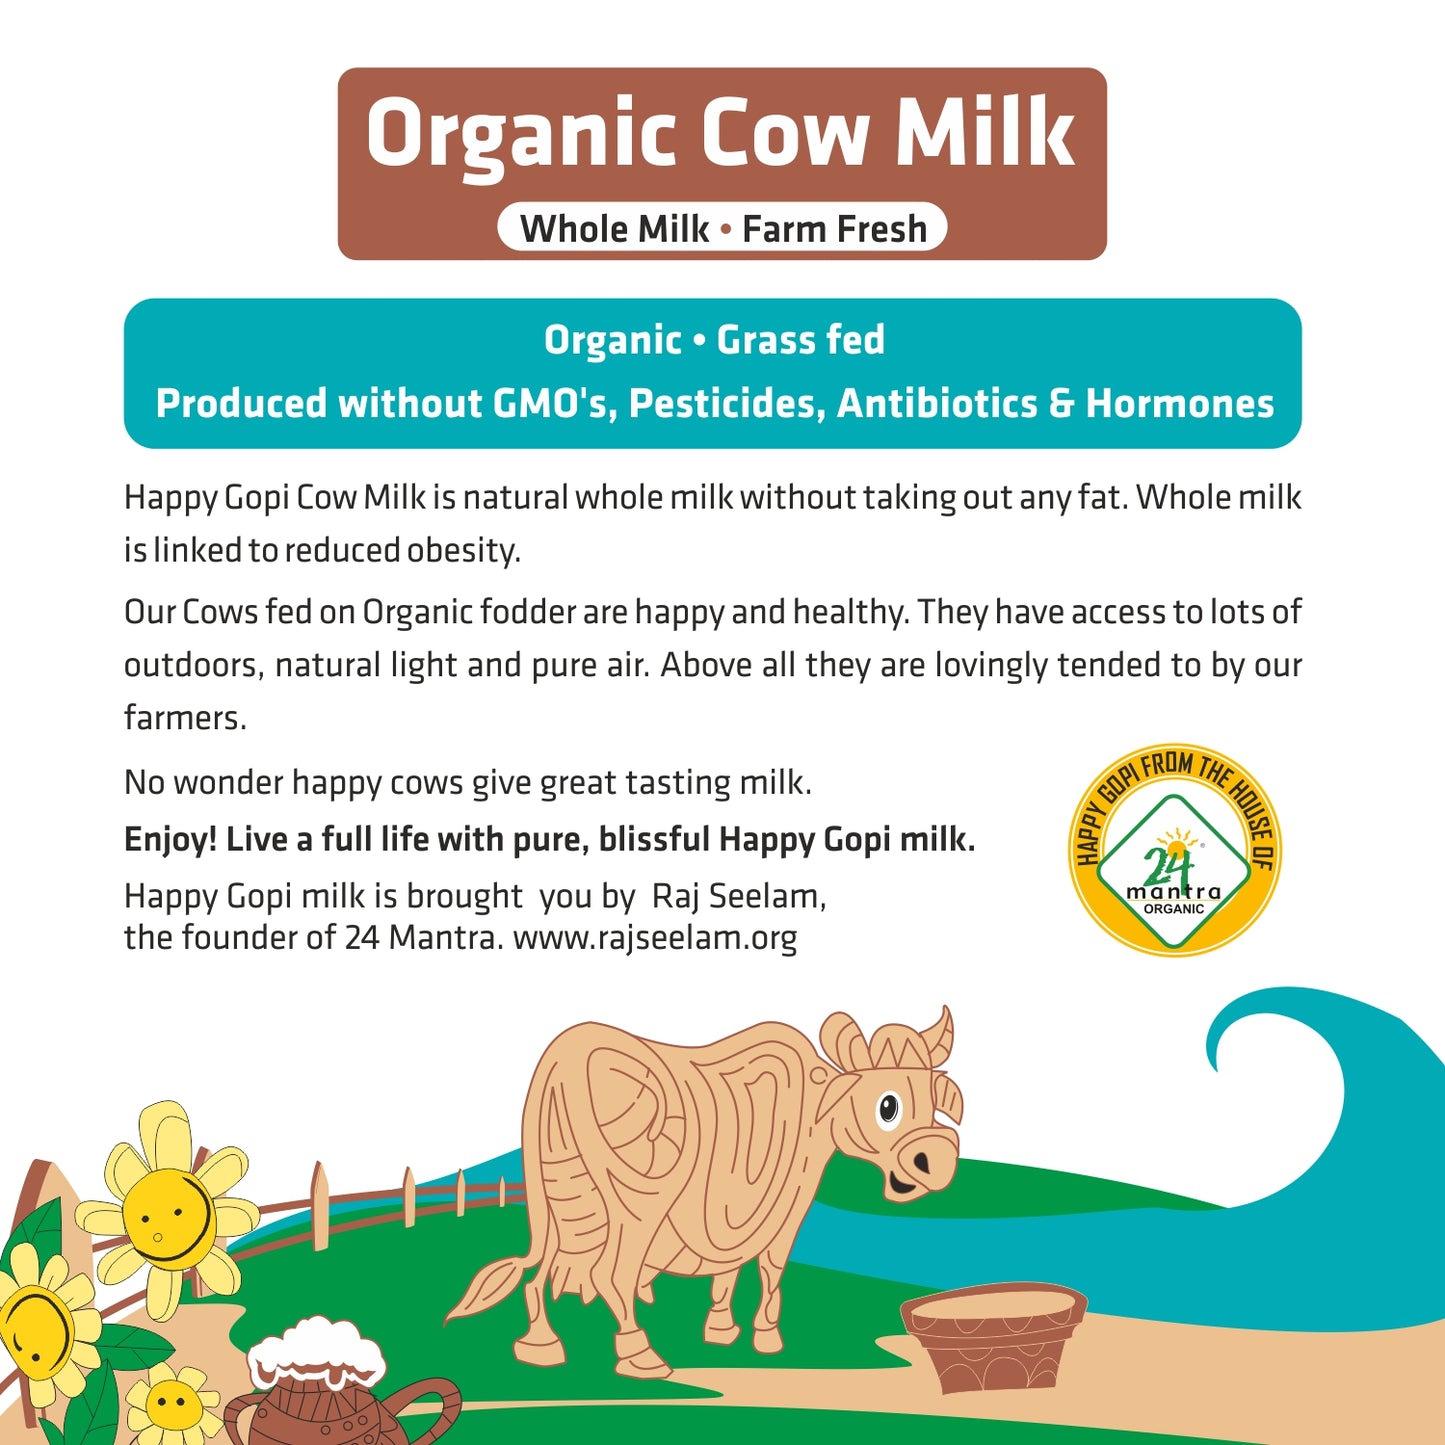 Organic cow milk